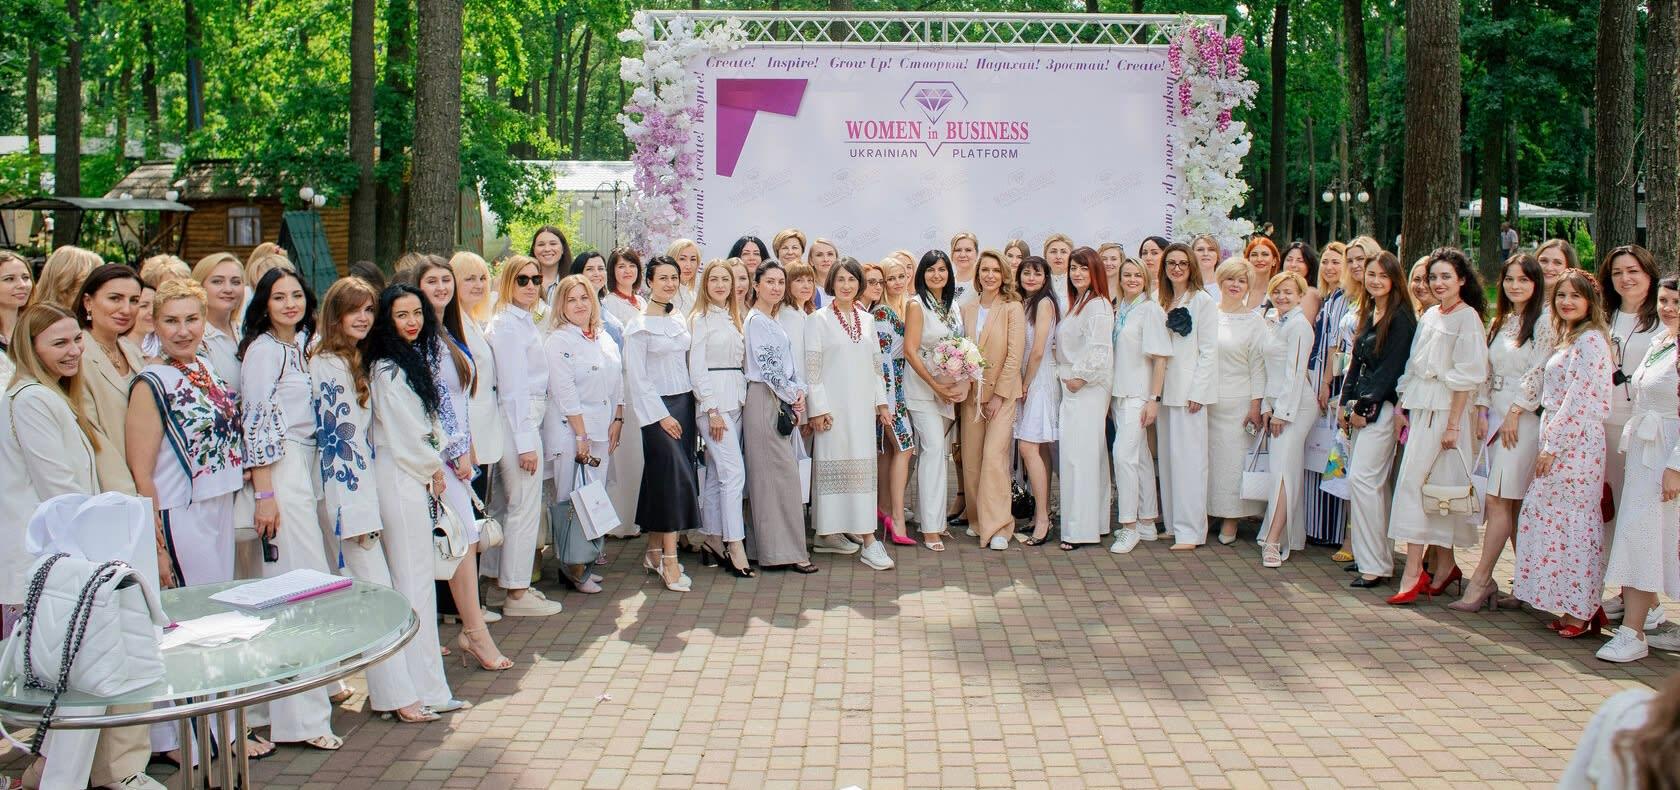 UNITING WOMEN LEADERS TO REBUILD UKRAINE